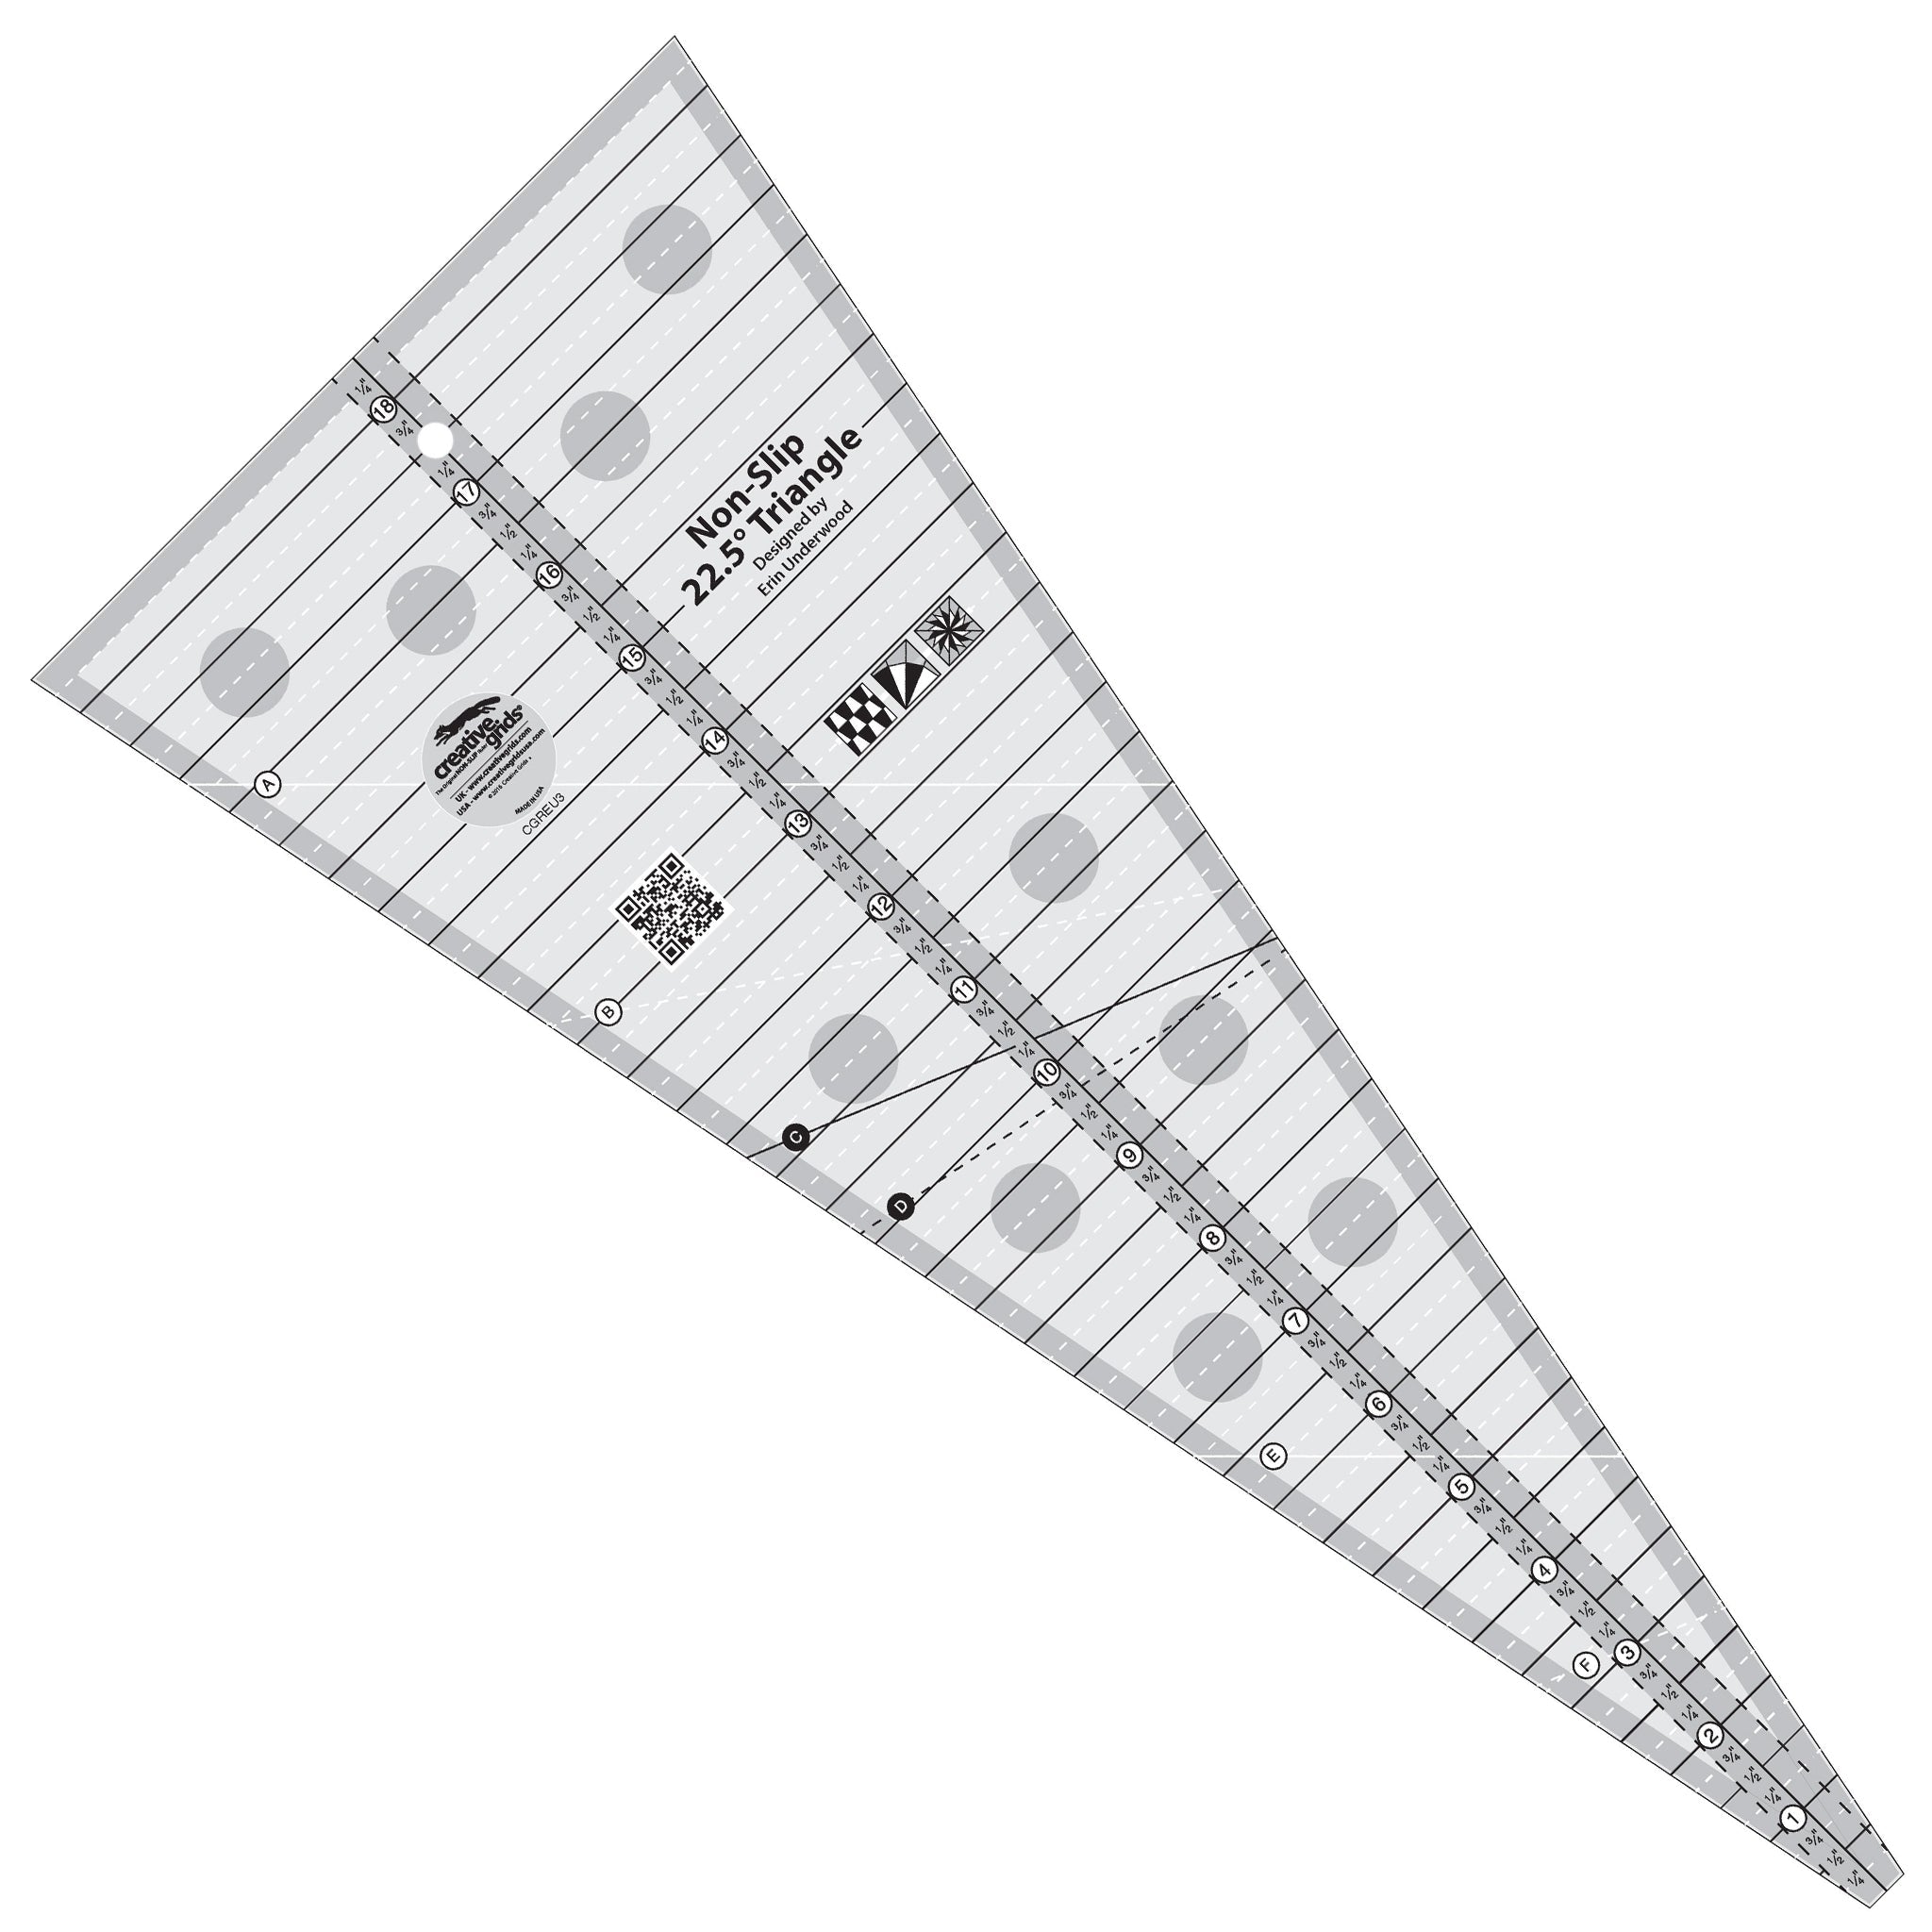 Creative Grids 22.5 Degree Triangle Quilt Ruler (CGREU3)